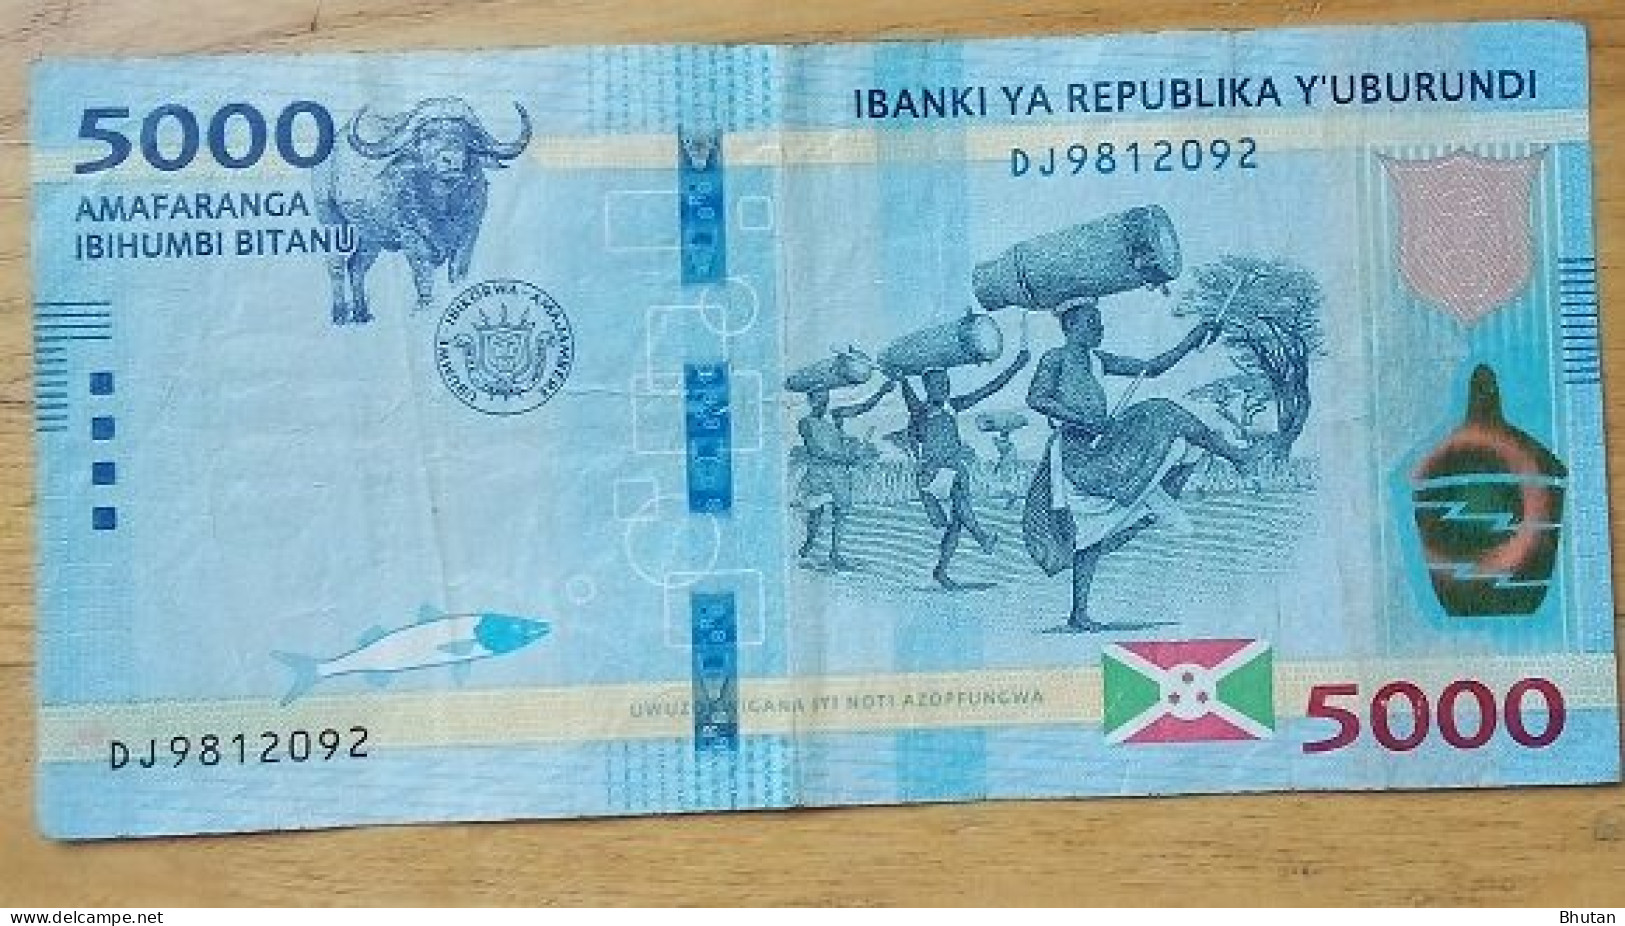 Burundi - 5000 Burundi Francs - Other - Africa